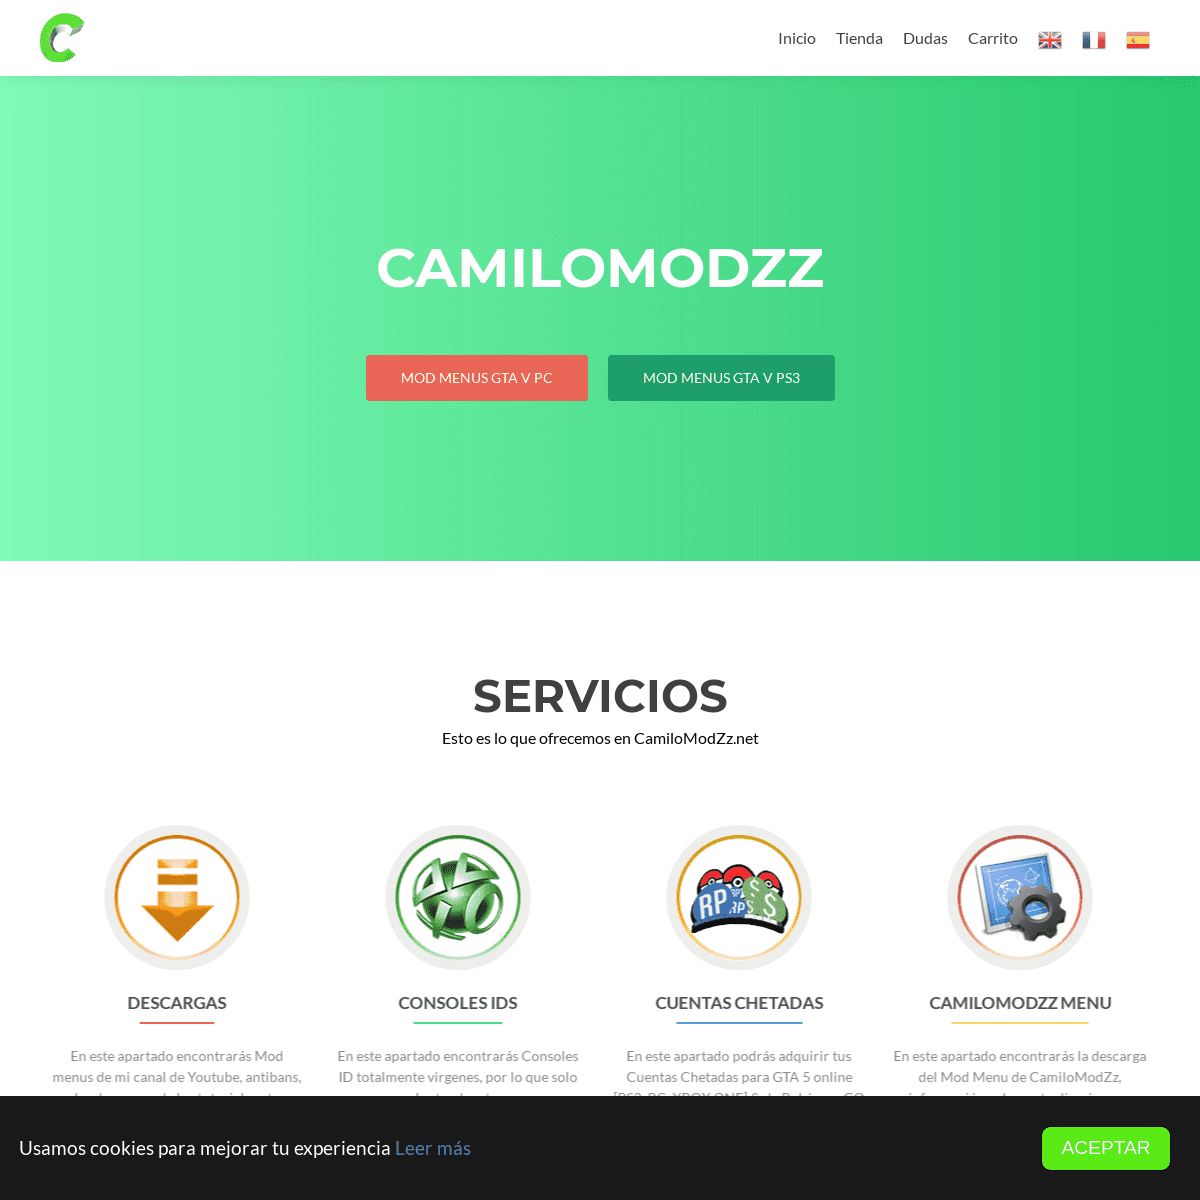 A complete backup of camilomodzz.net